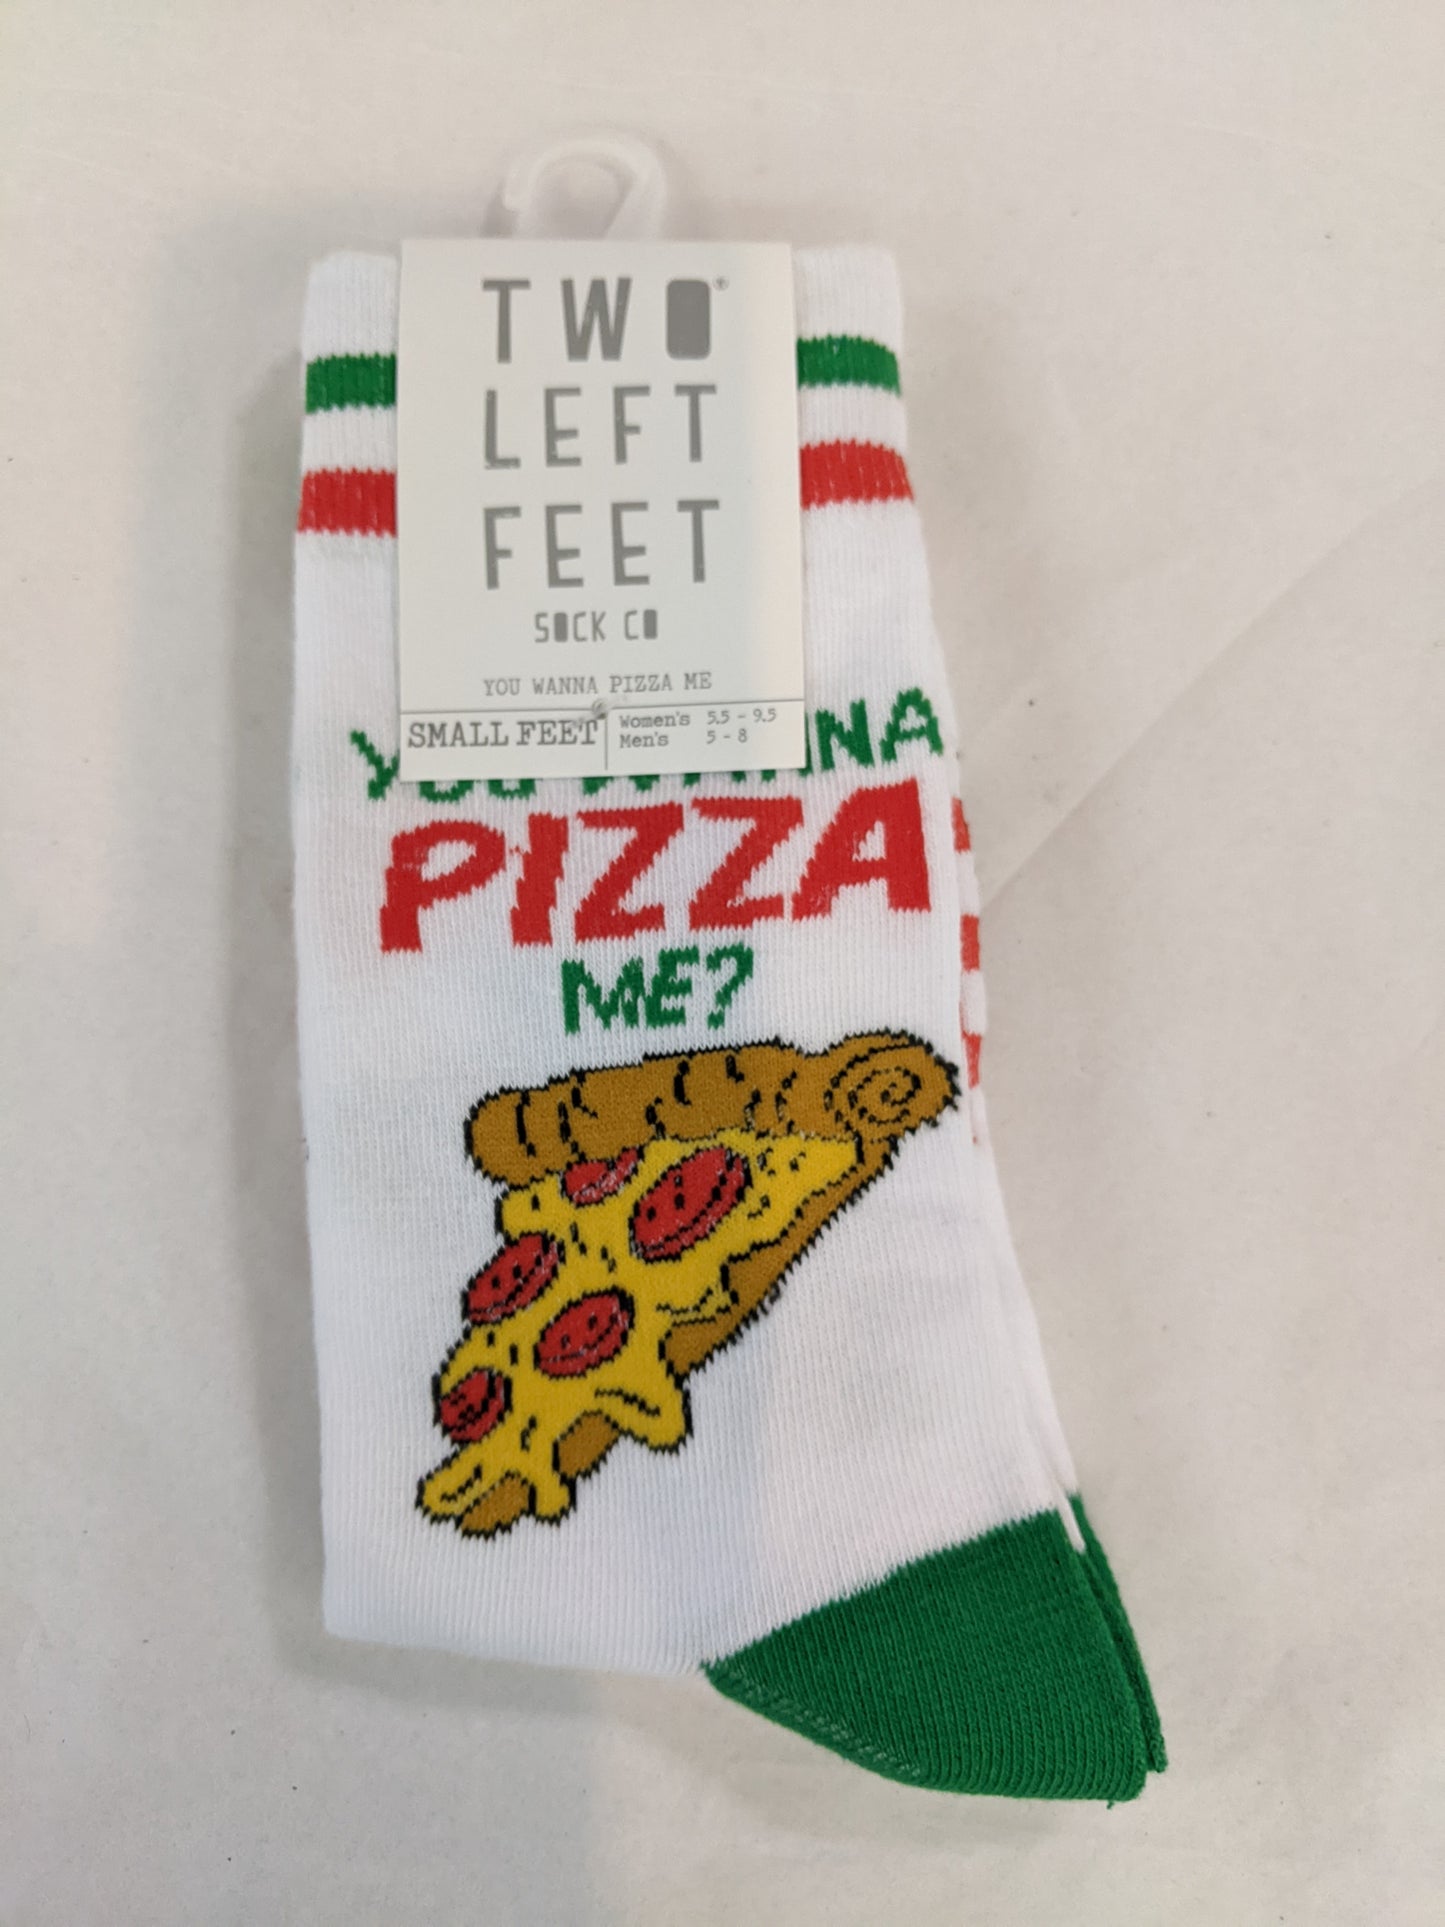 Two Left Feet Socks- You Wanna Pizza Me